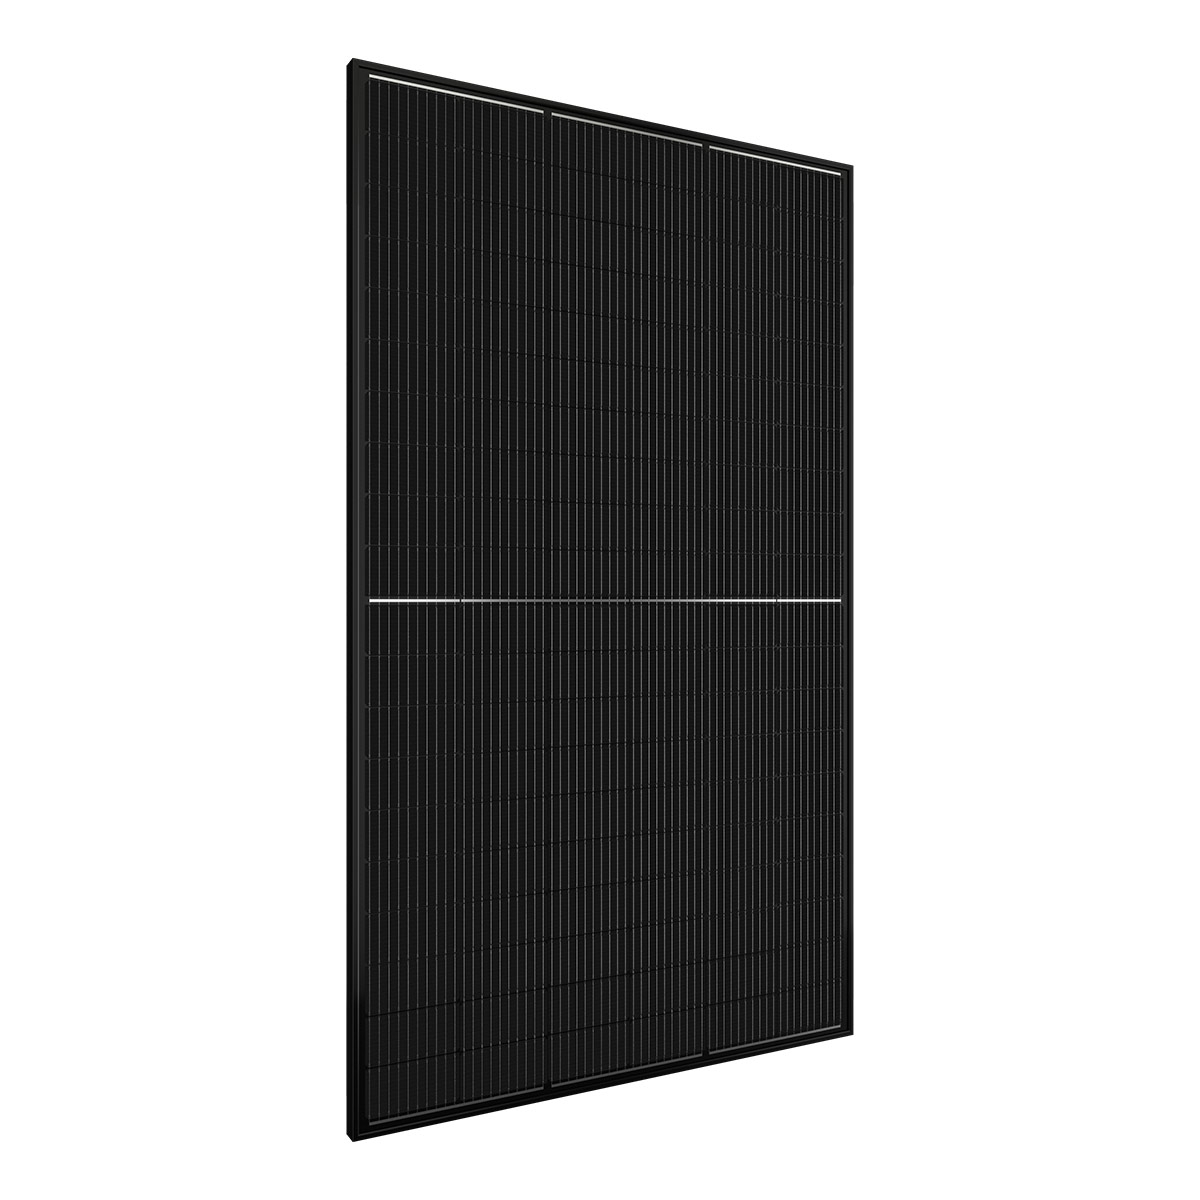 TommaTech 455Wp 120PM M10 Dark Series Solar Panel